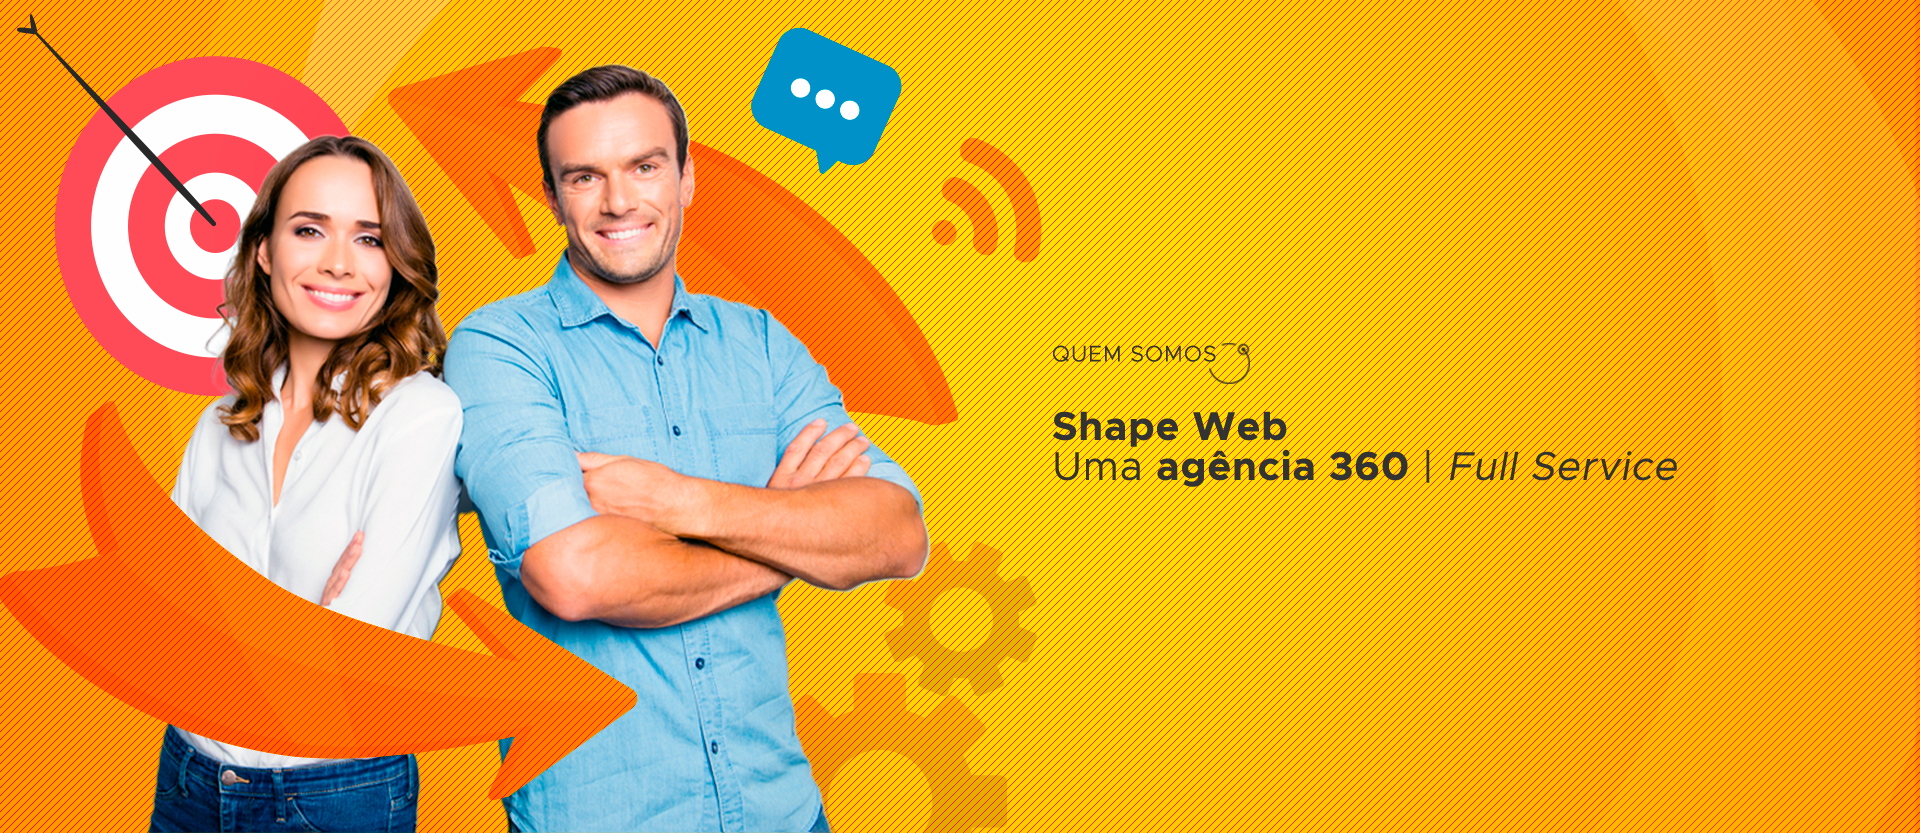 Shape Web - Uma agência 360 - Full Service